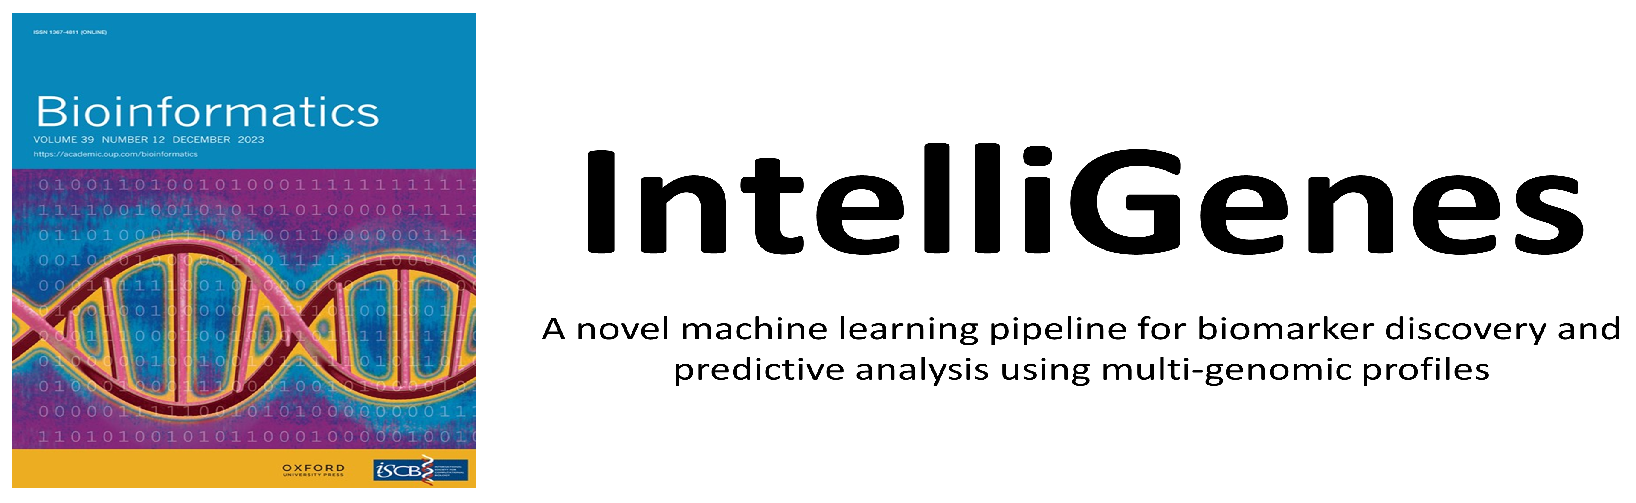 IntelliGenes: AI/ML Pipeline